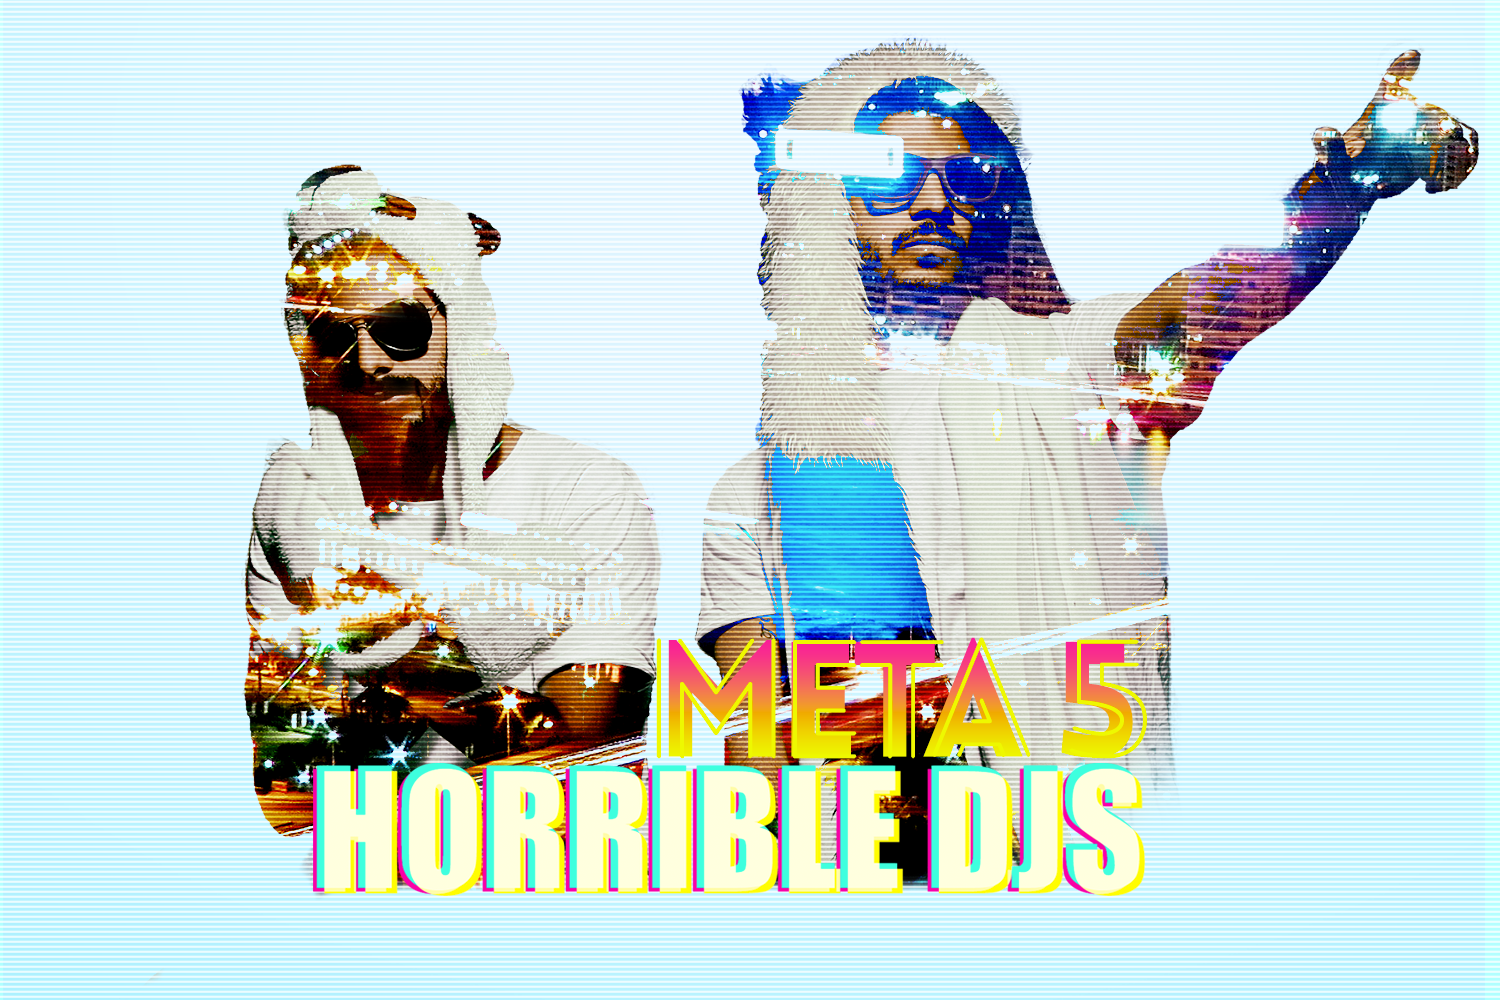 Single Review: Horrible DJs Astounding New Track Meta5